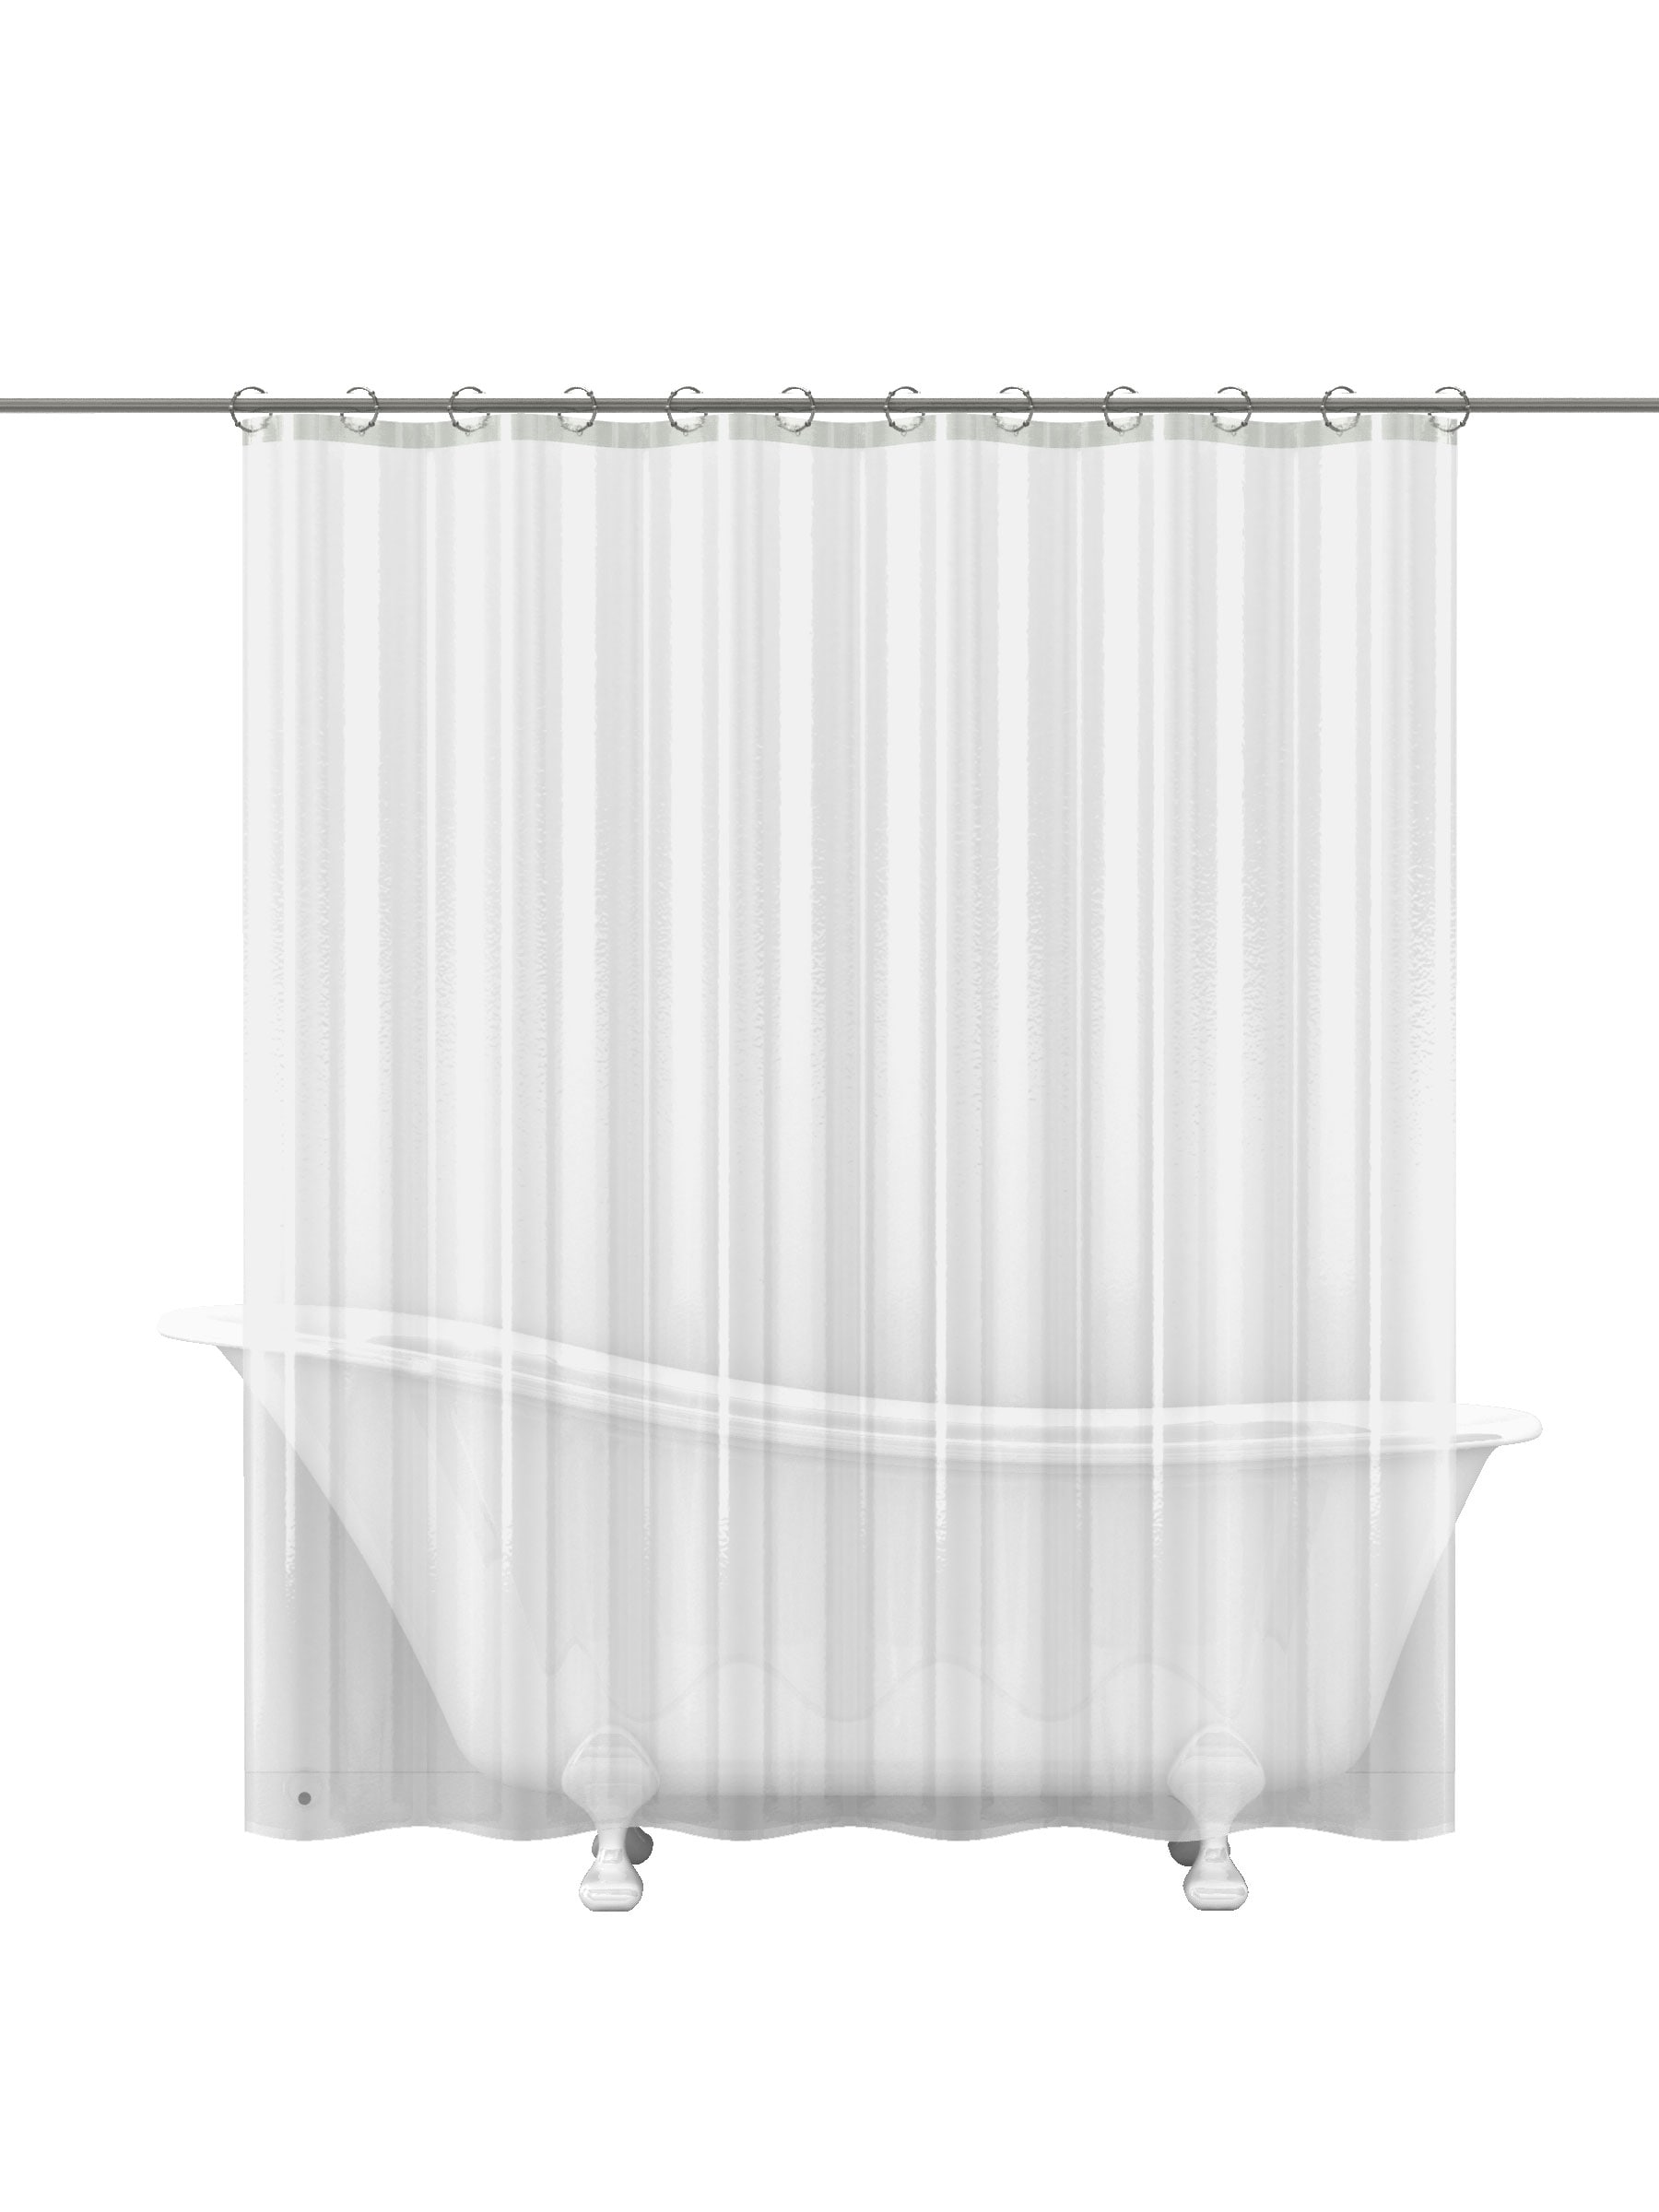 Shower Curtains Liners At Com, Decorative Vinyl Shower Curtains